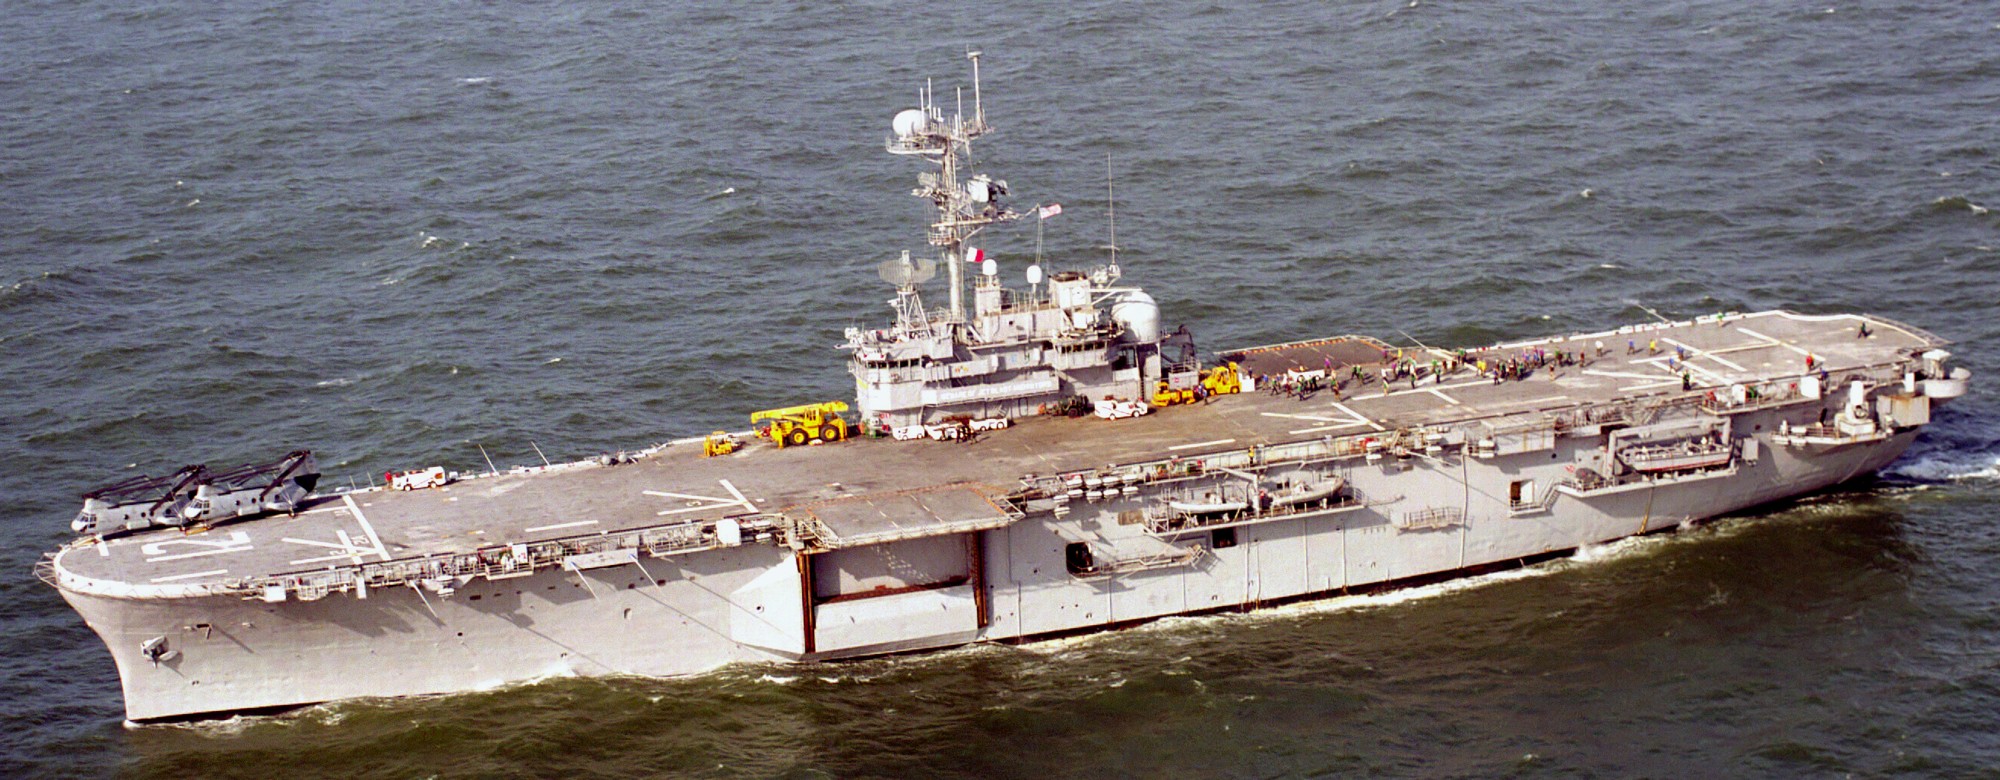 mcs-12 uss inchon mine countermeasures support ship us navy 13